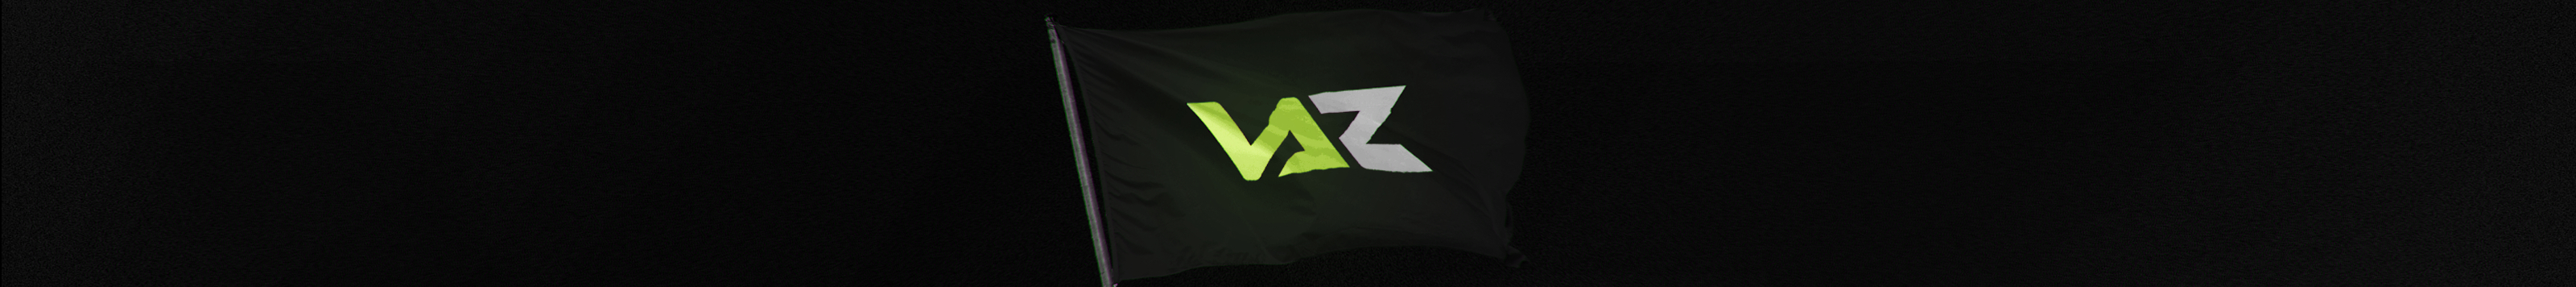 Vaztfy ‎'s profile banner